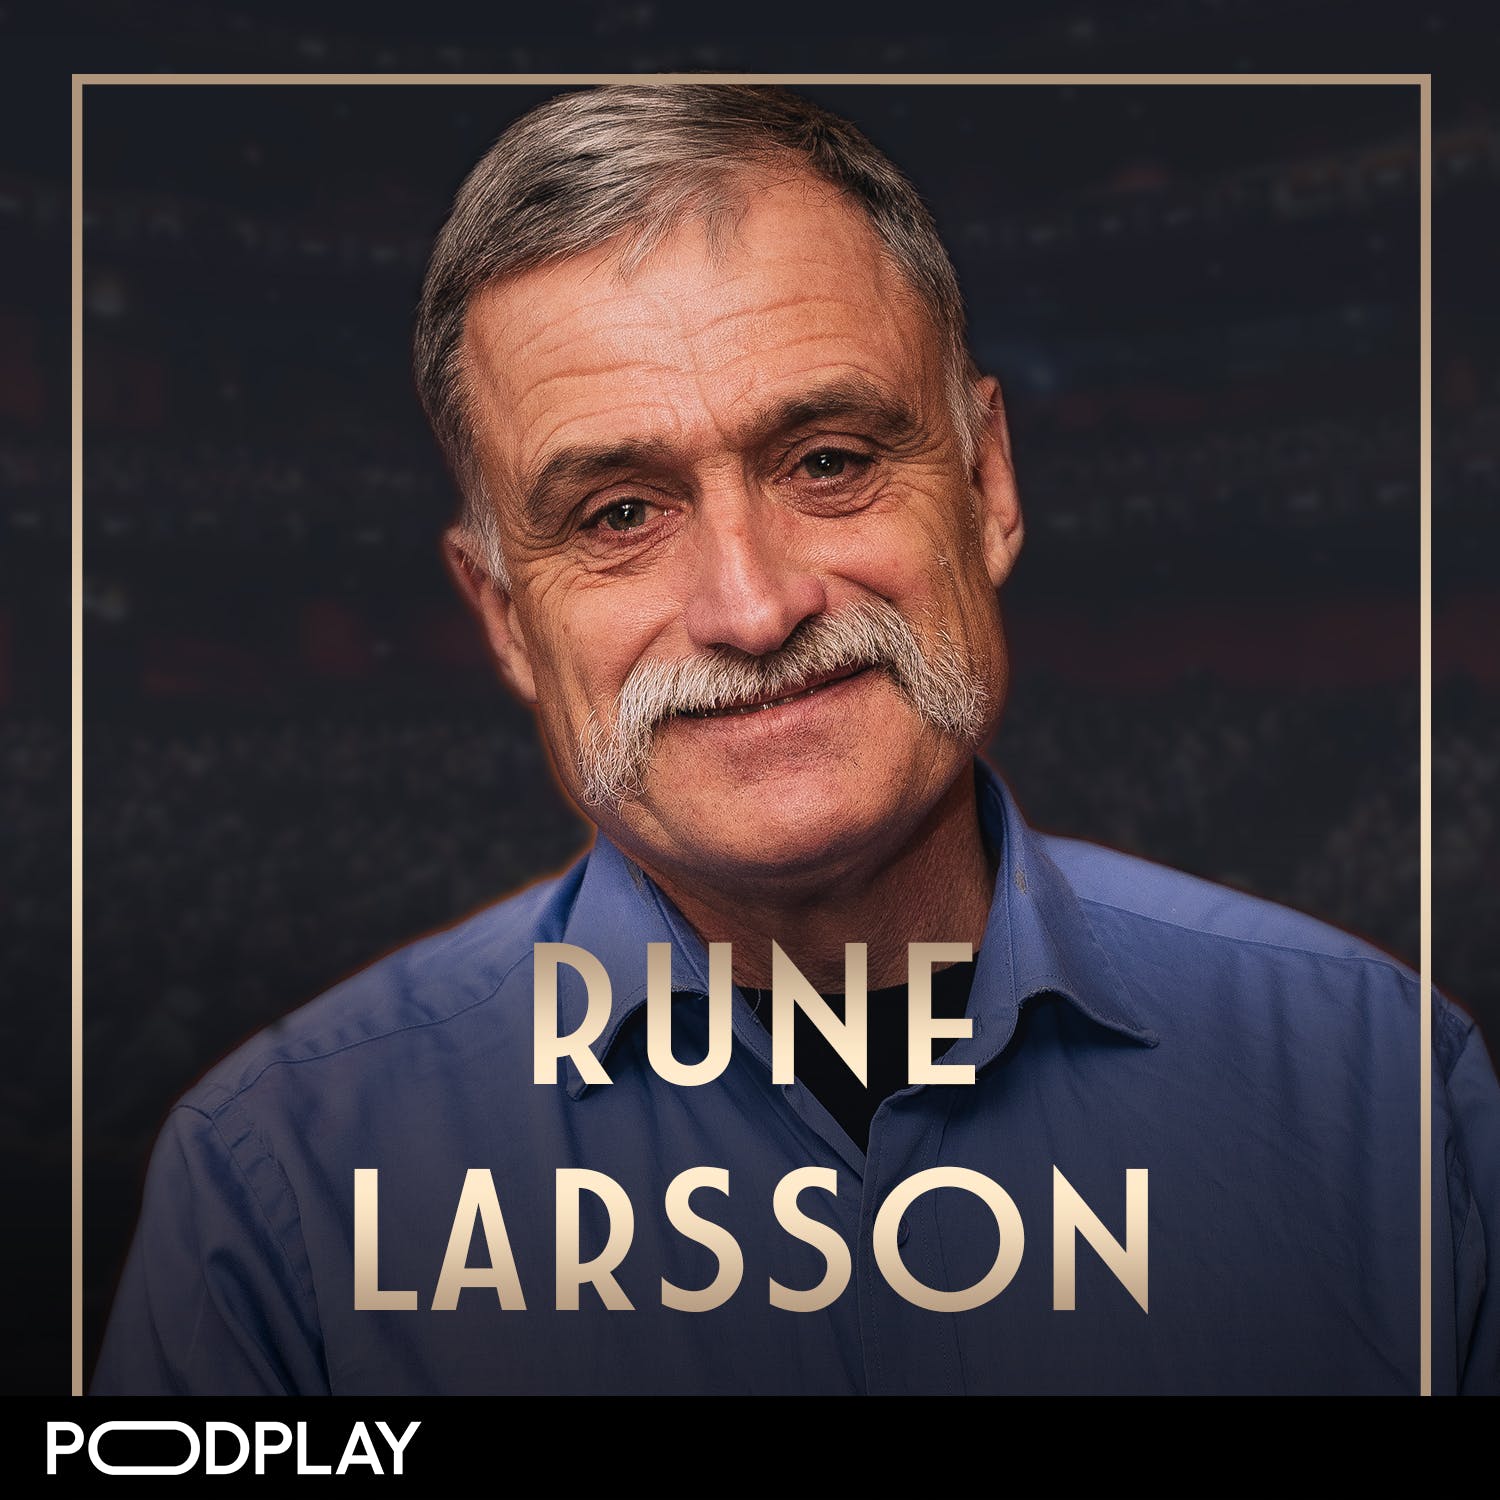 365. Rune Larsson - "Sveriges uthålligaste man", Short